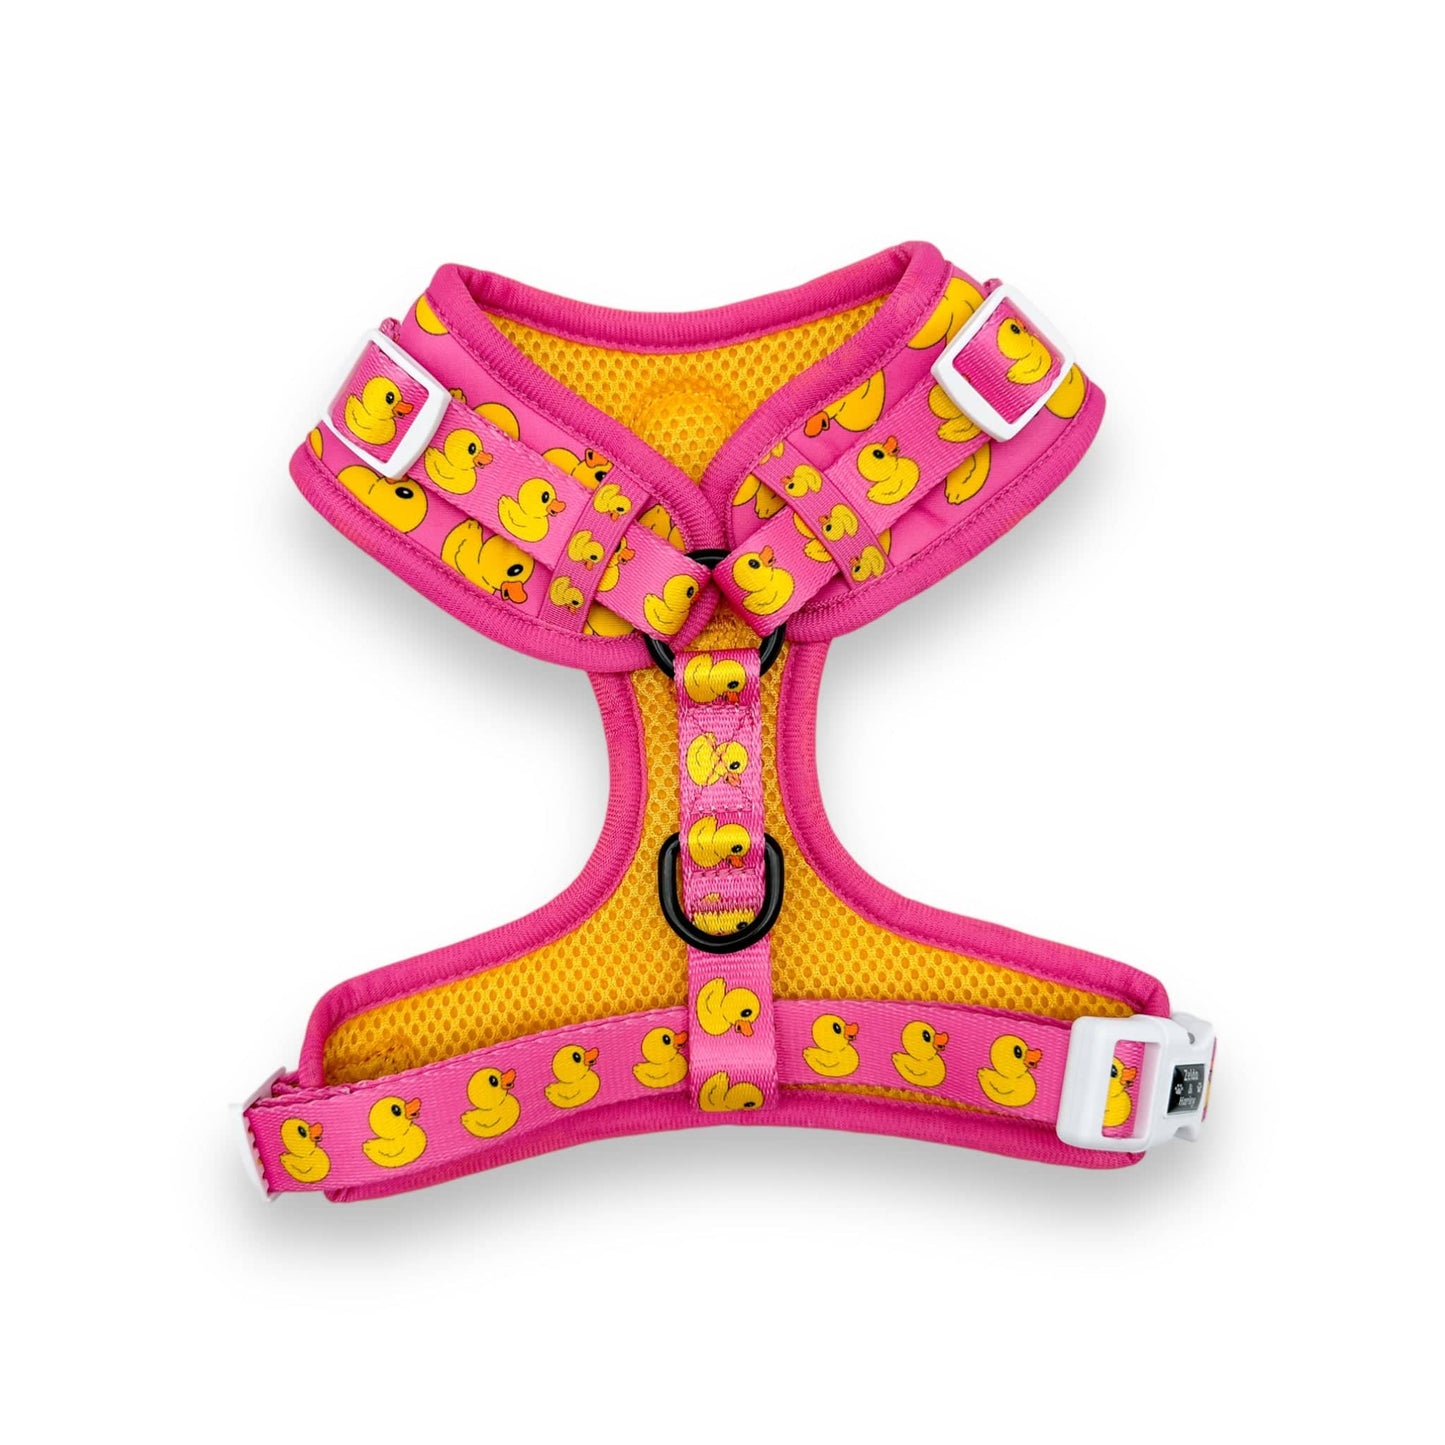 Zelda & Harley Harness Rubber Duckie Pink - No Pull Adjustable Dog Harness